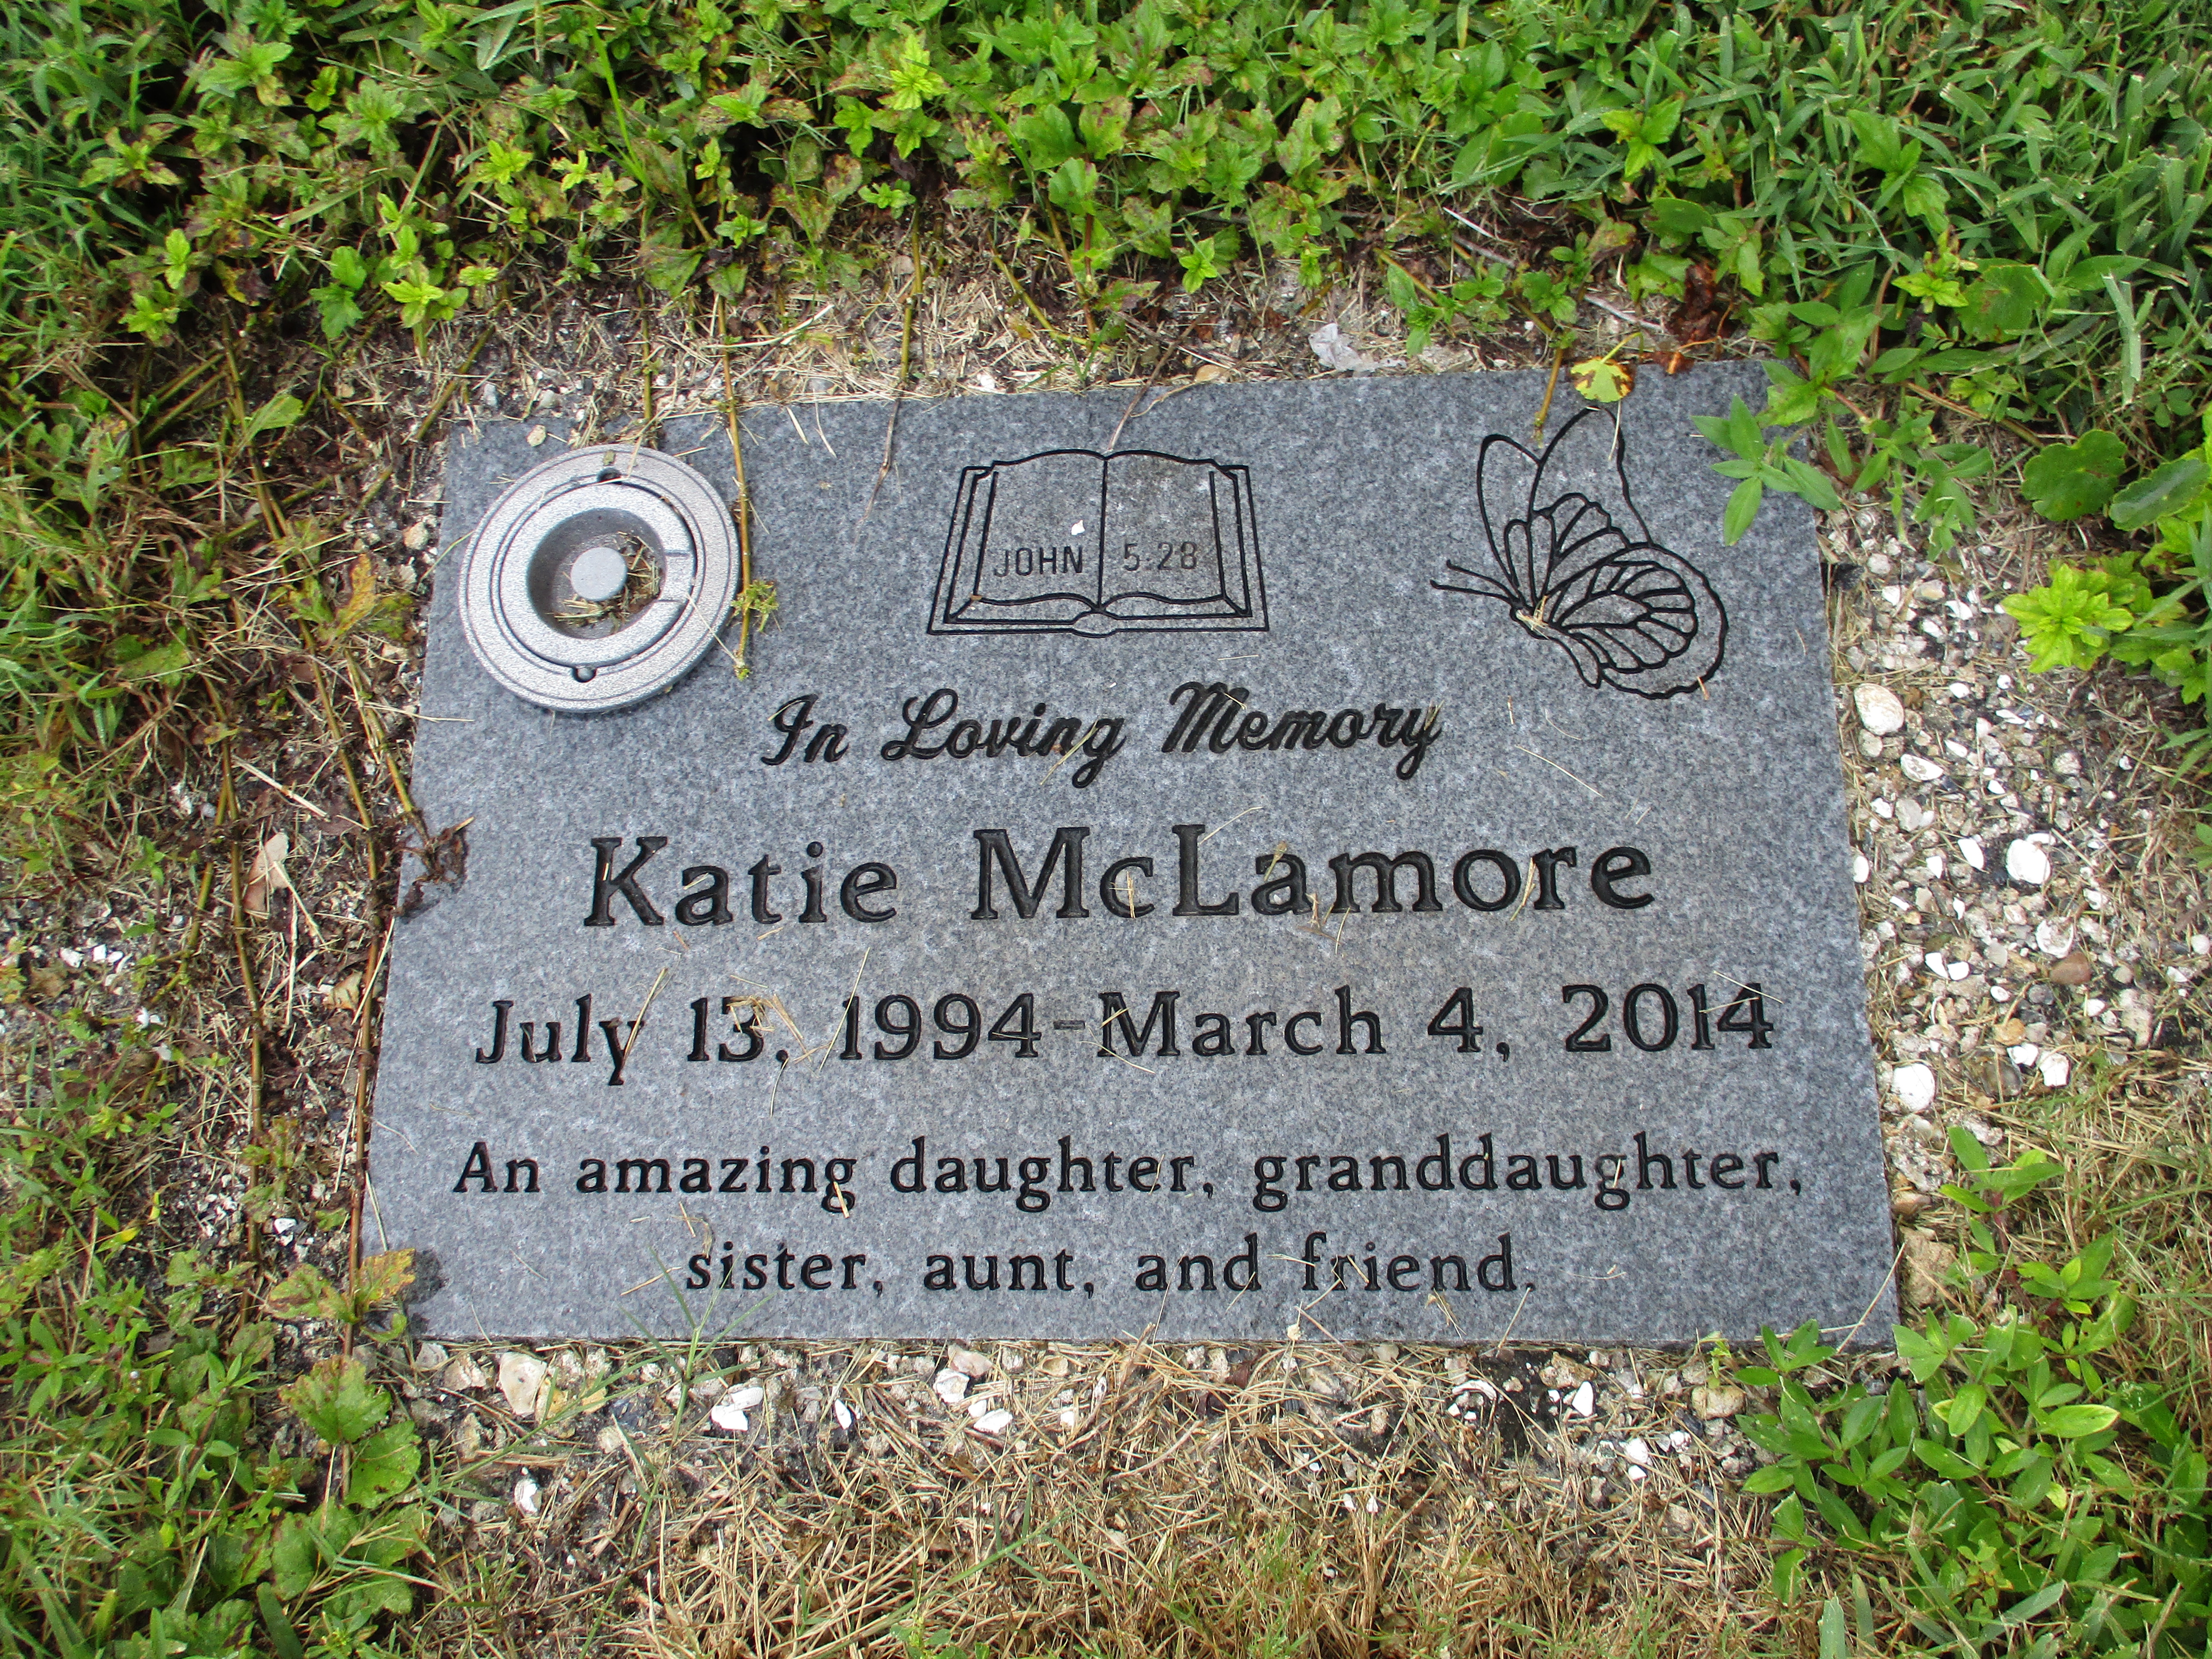 Katie McLamore